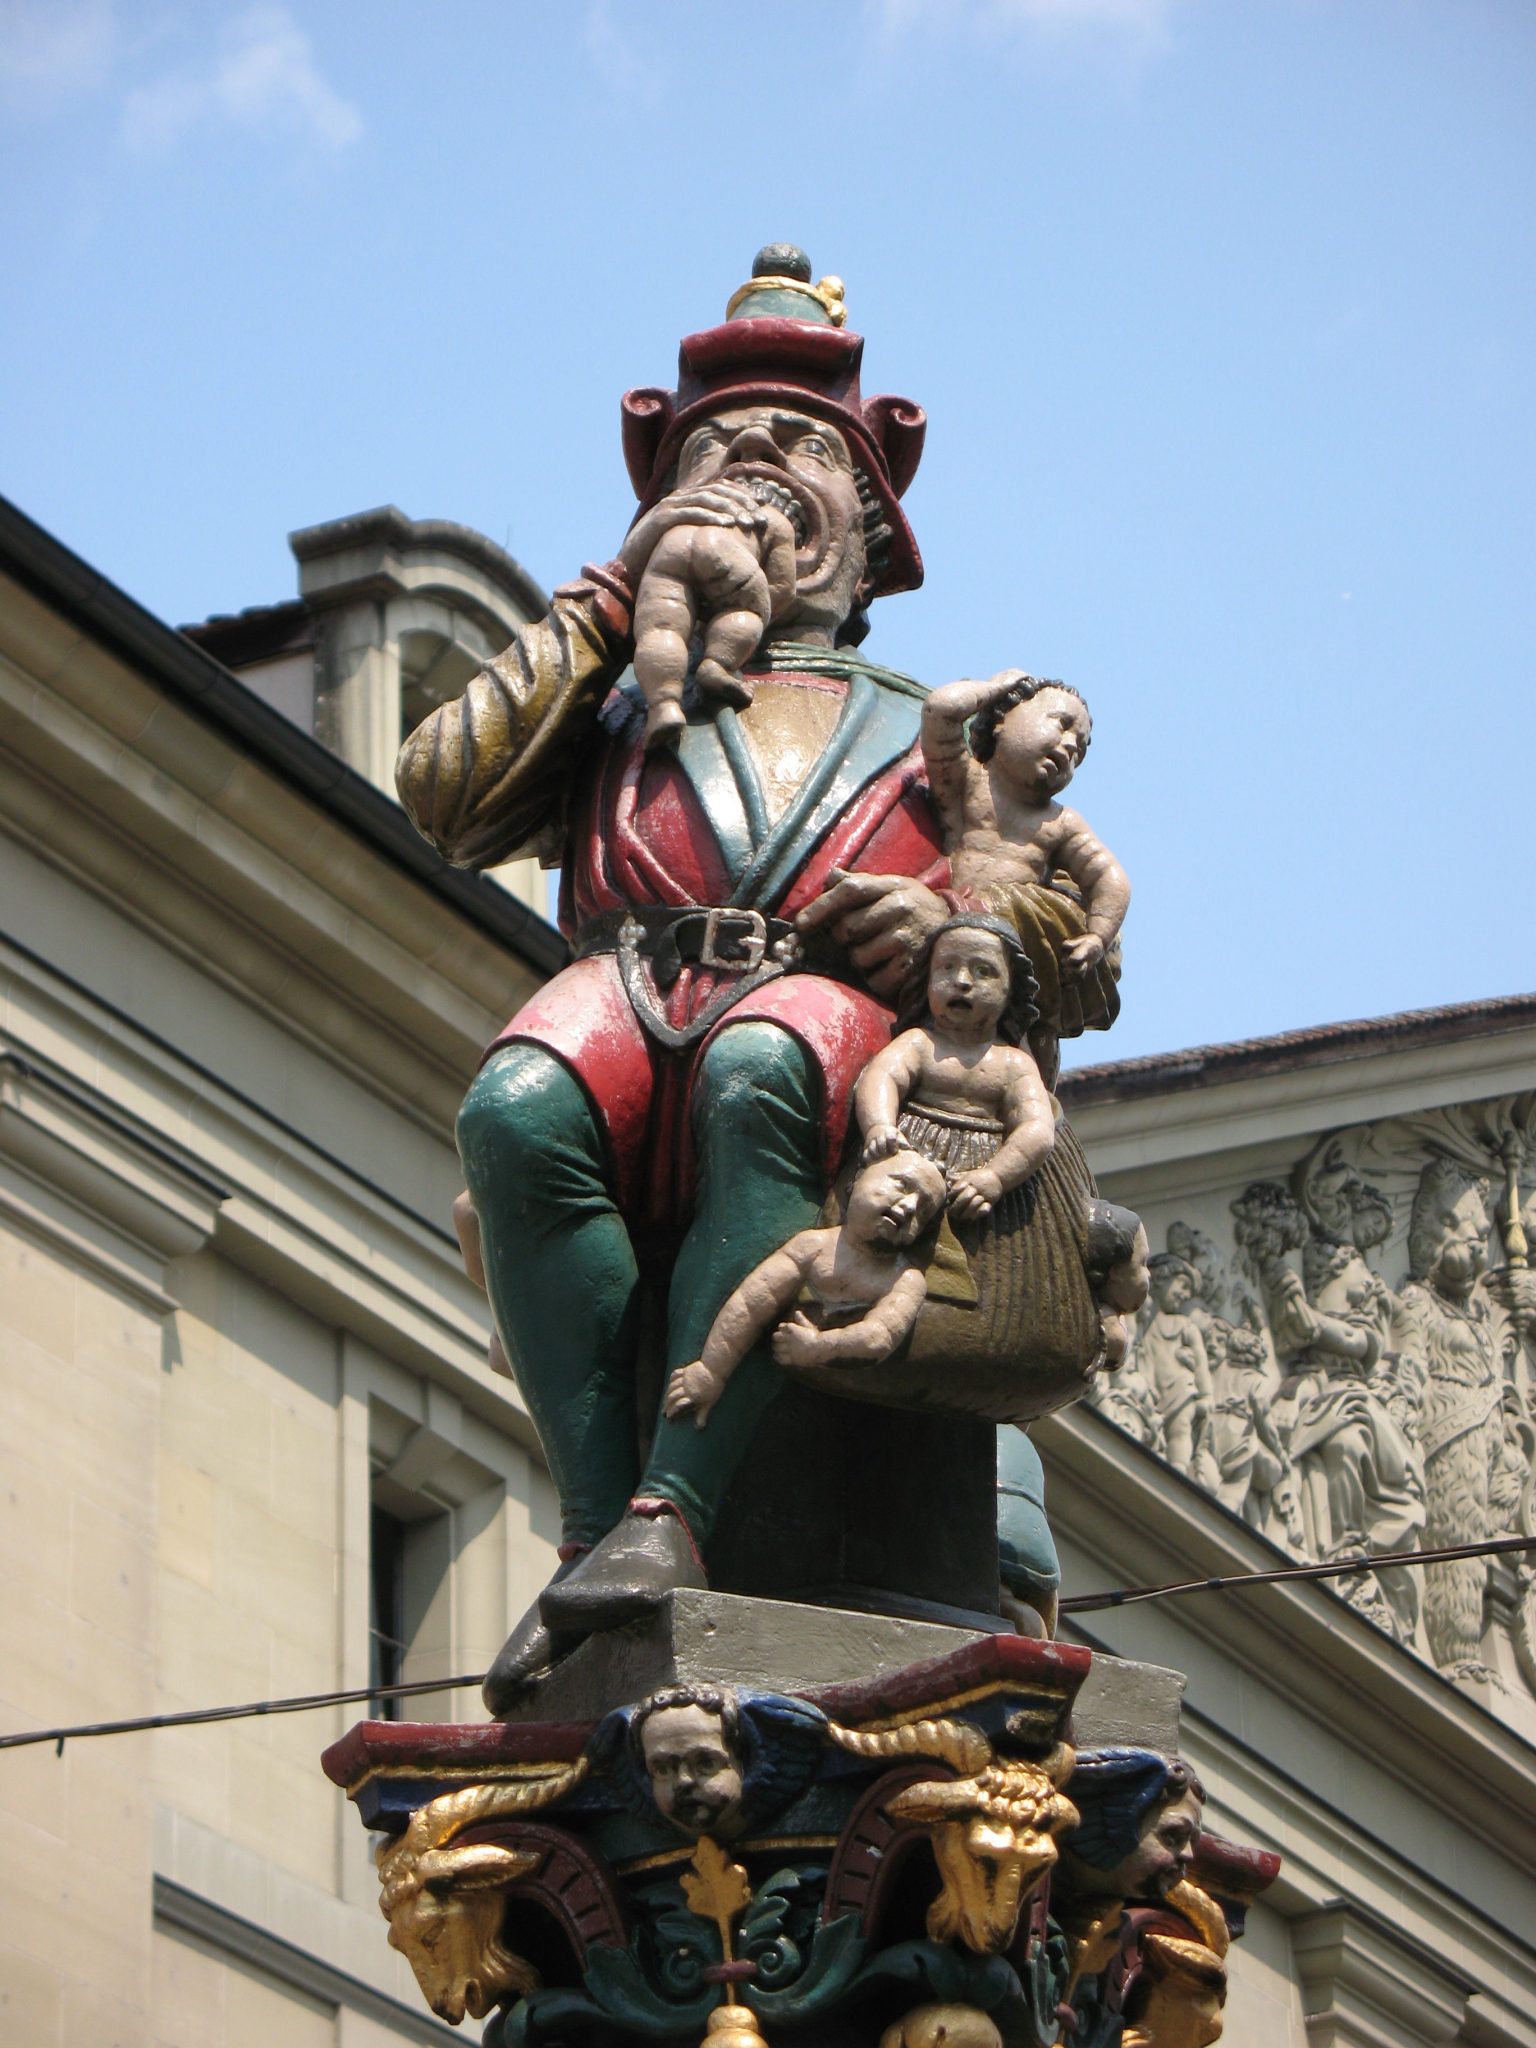 Kindlifresser (Child Eater) Fountain, Bern, Switzerland